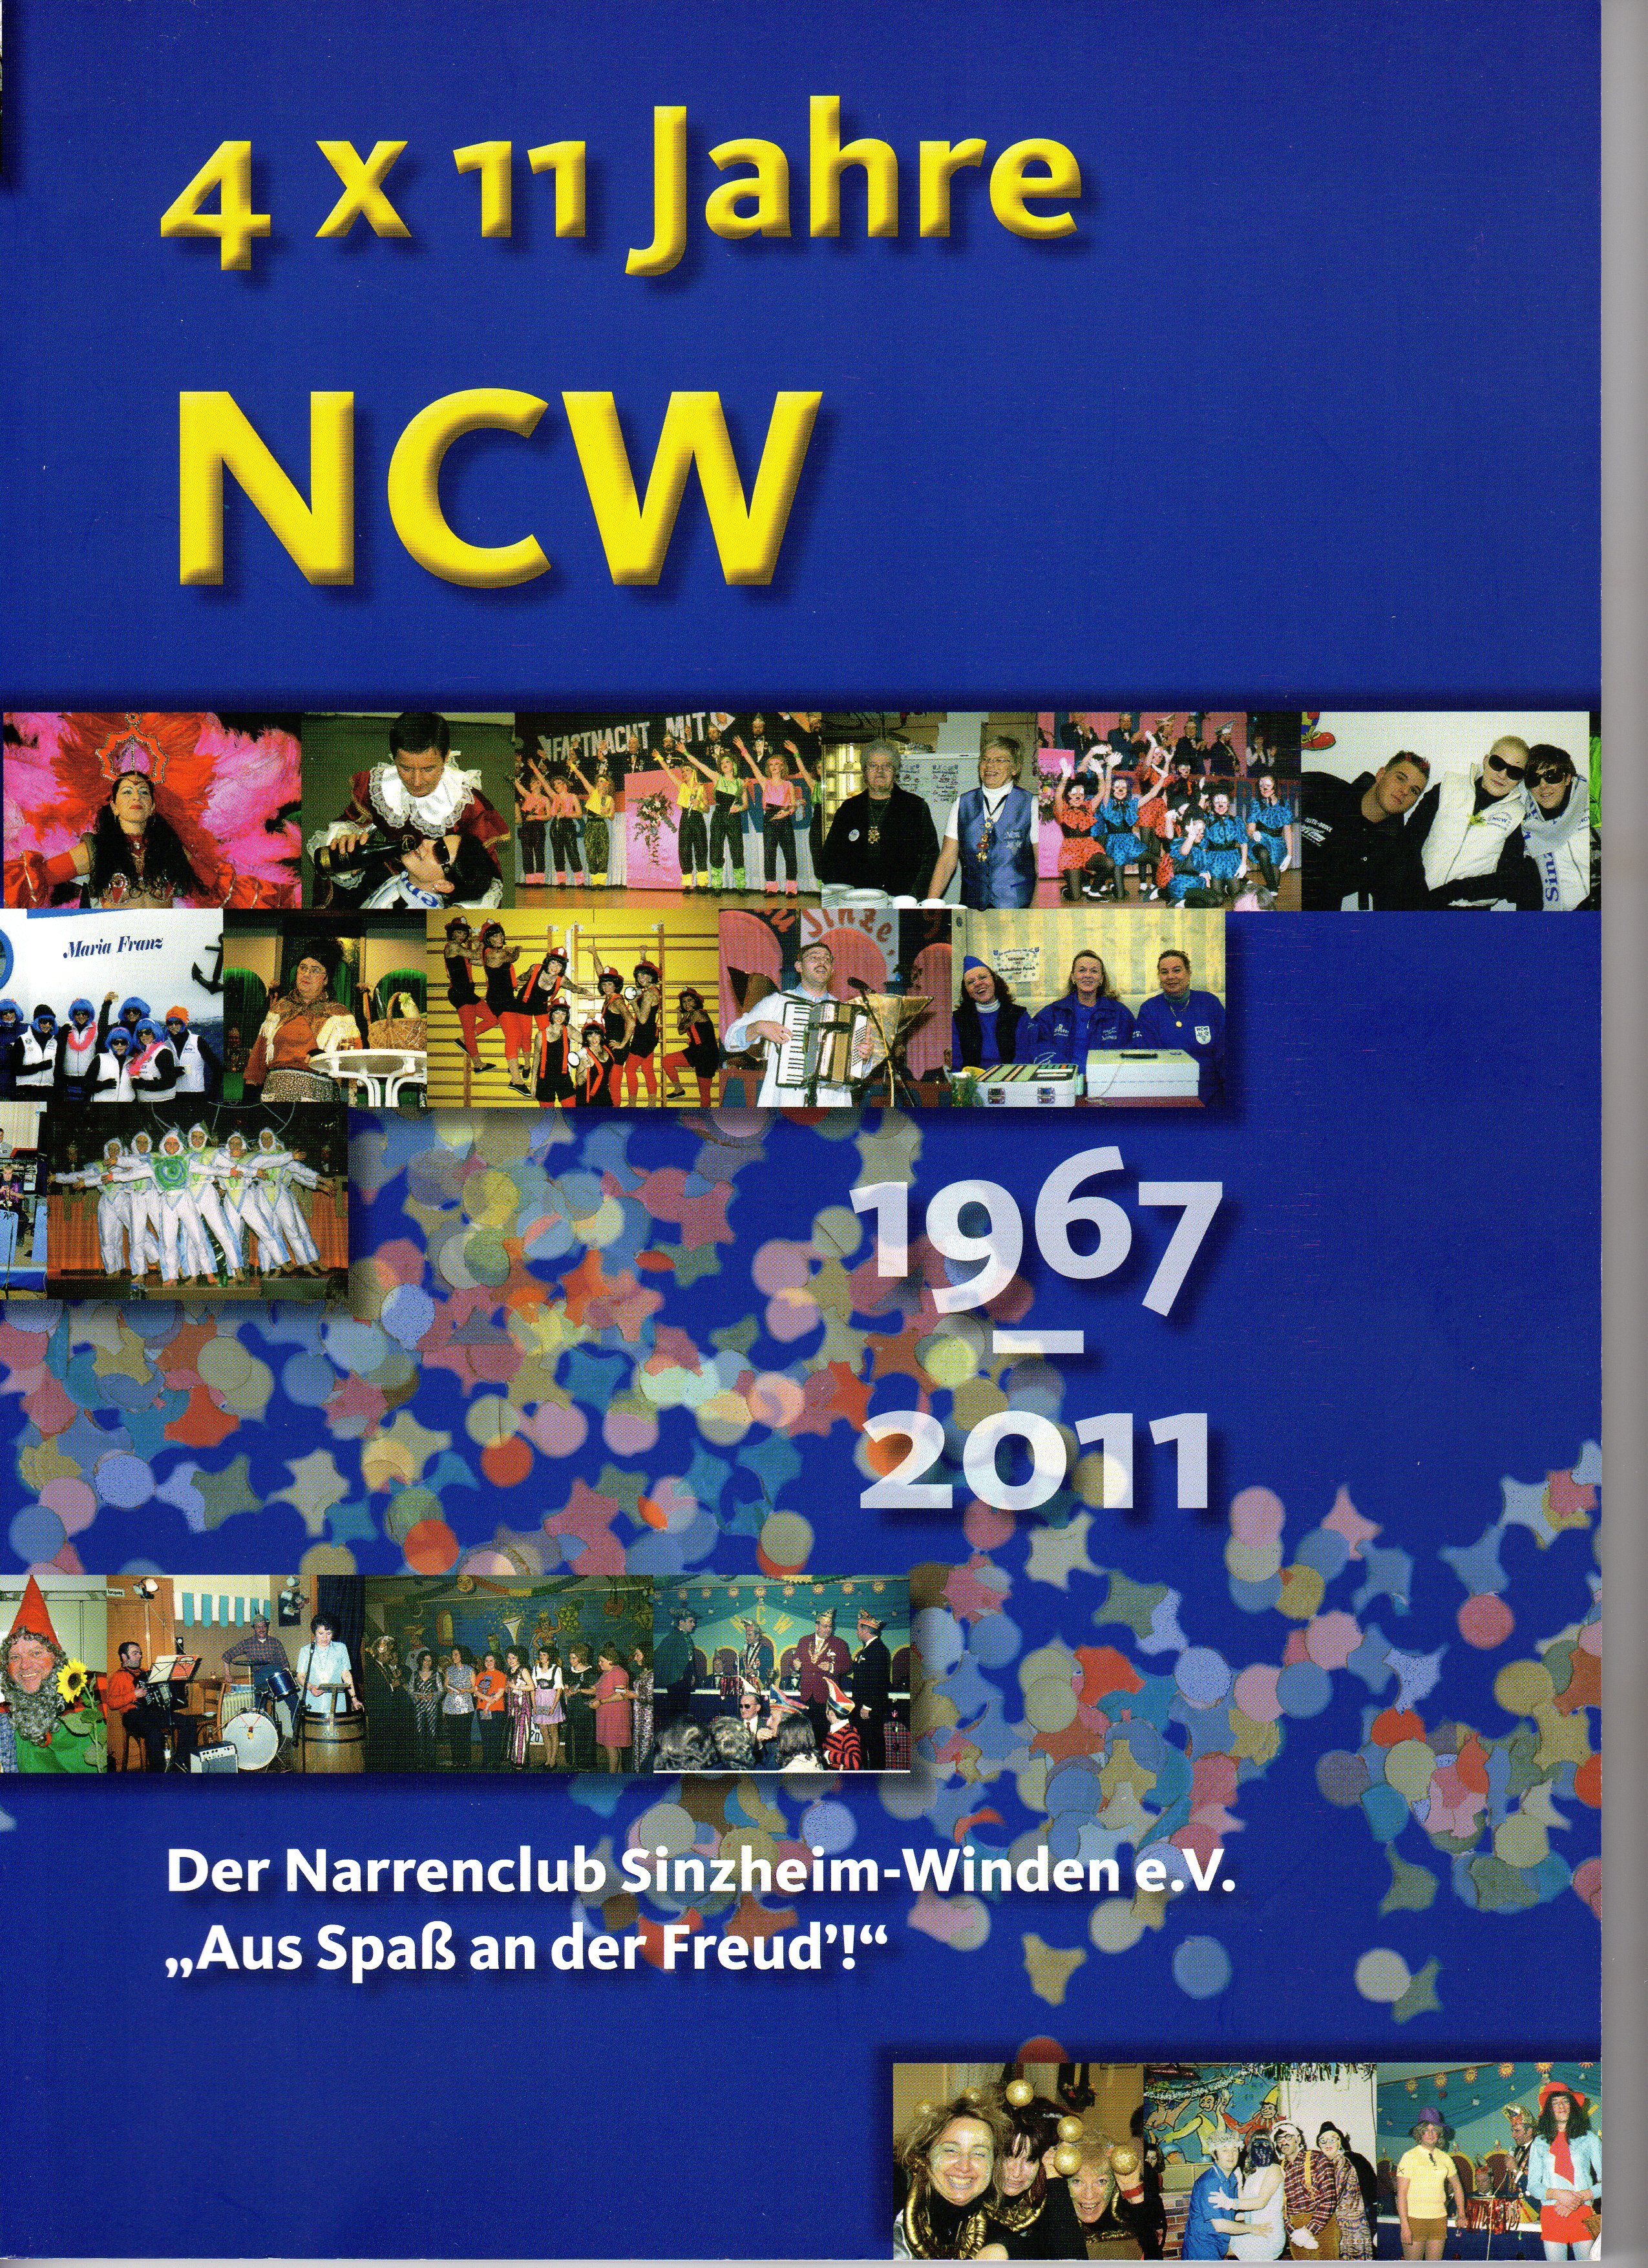 NCW_20160108_0052